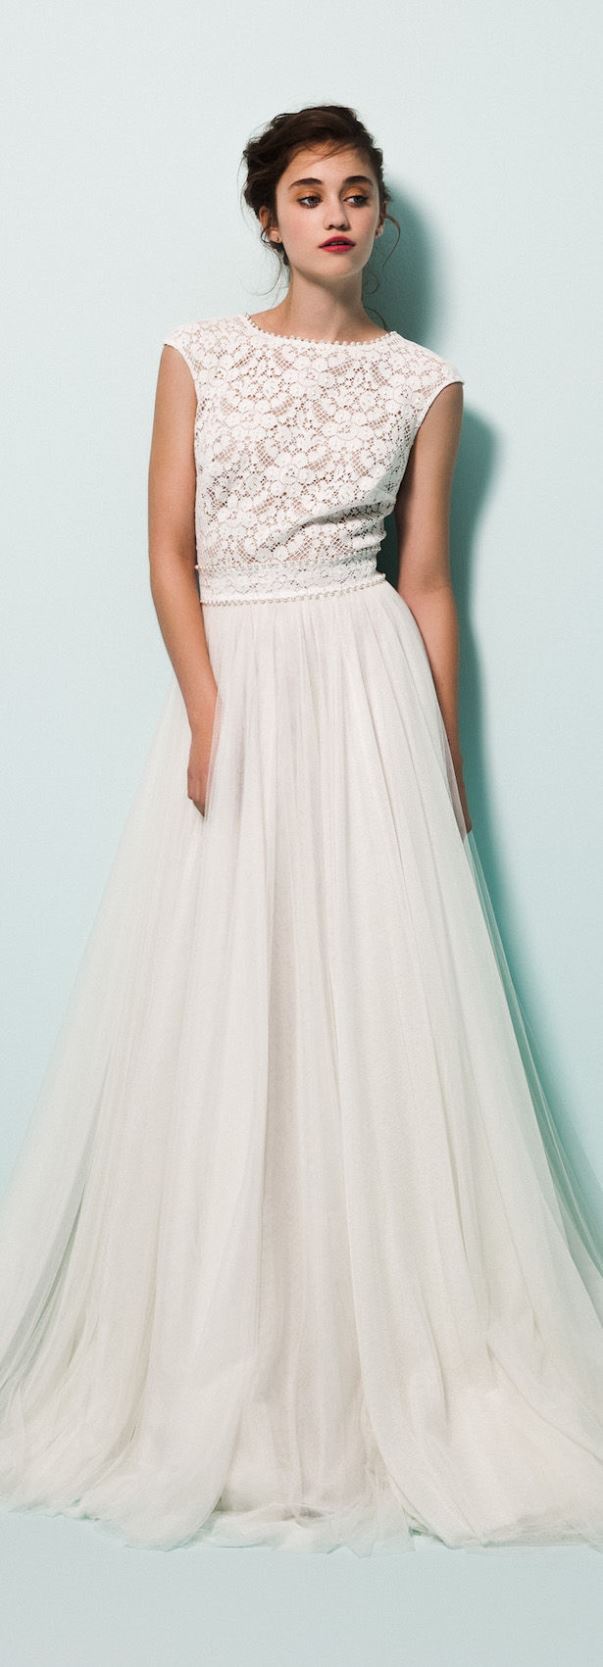 Daalarna Couture's Pearl Bridal 2015 Collection - LoveweddingsNG19